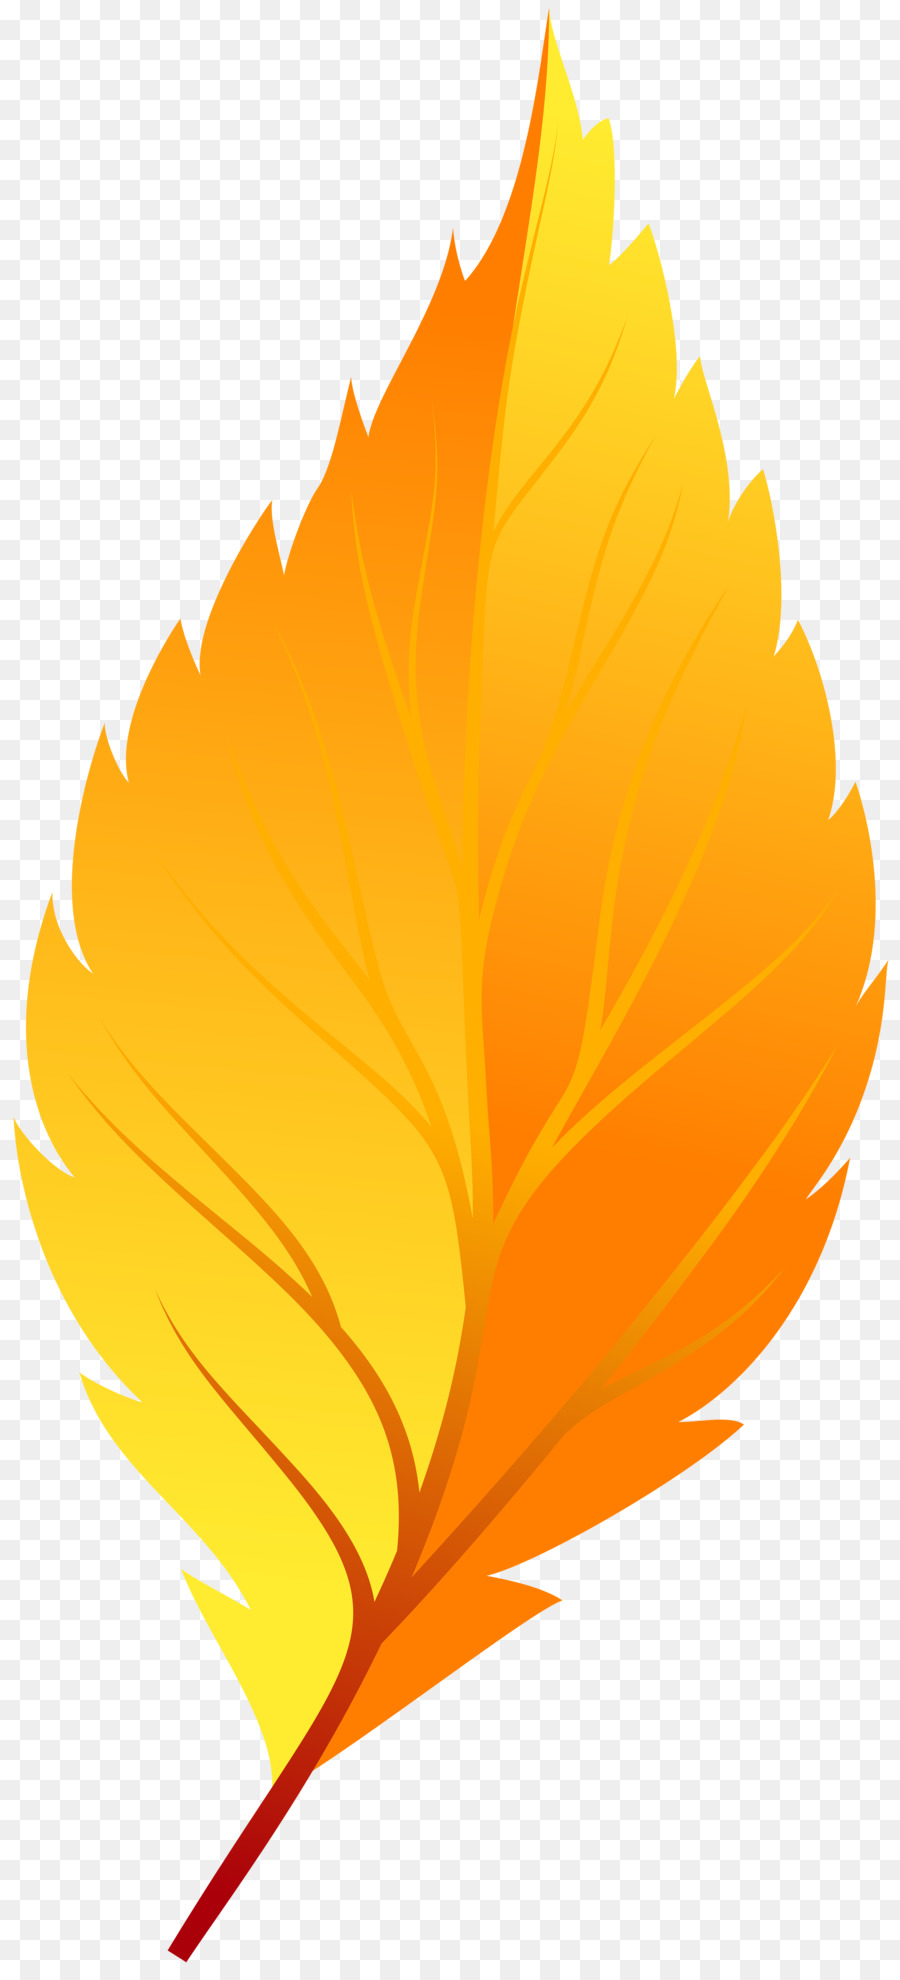 Autumn leaf color Yellow Clip art - autumn leaves png download - 2741*6000 - Free Transparent Leaf png Download.